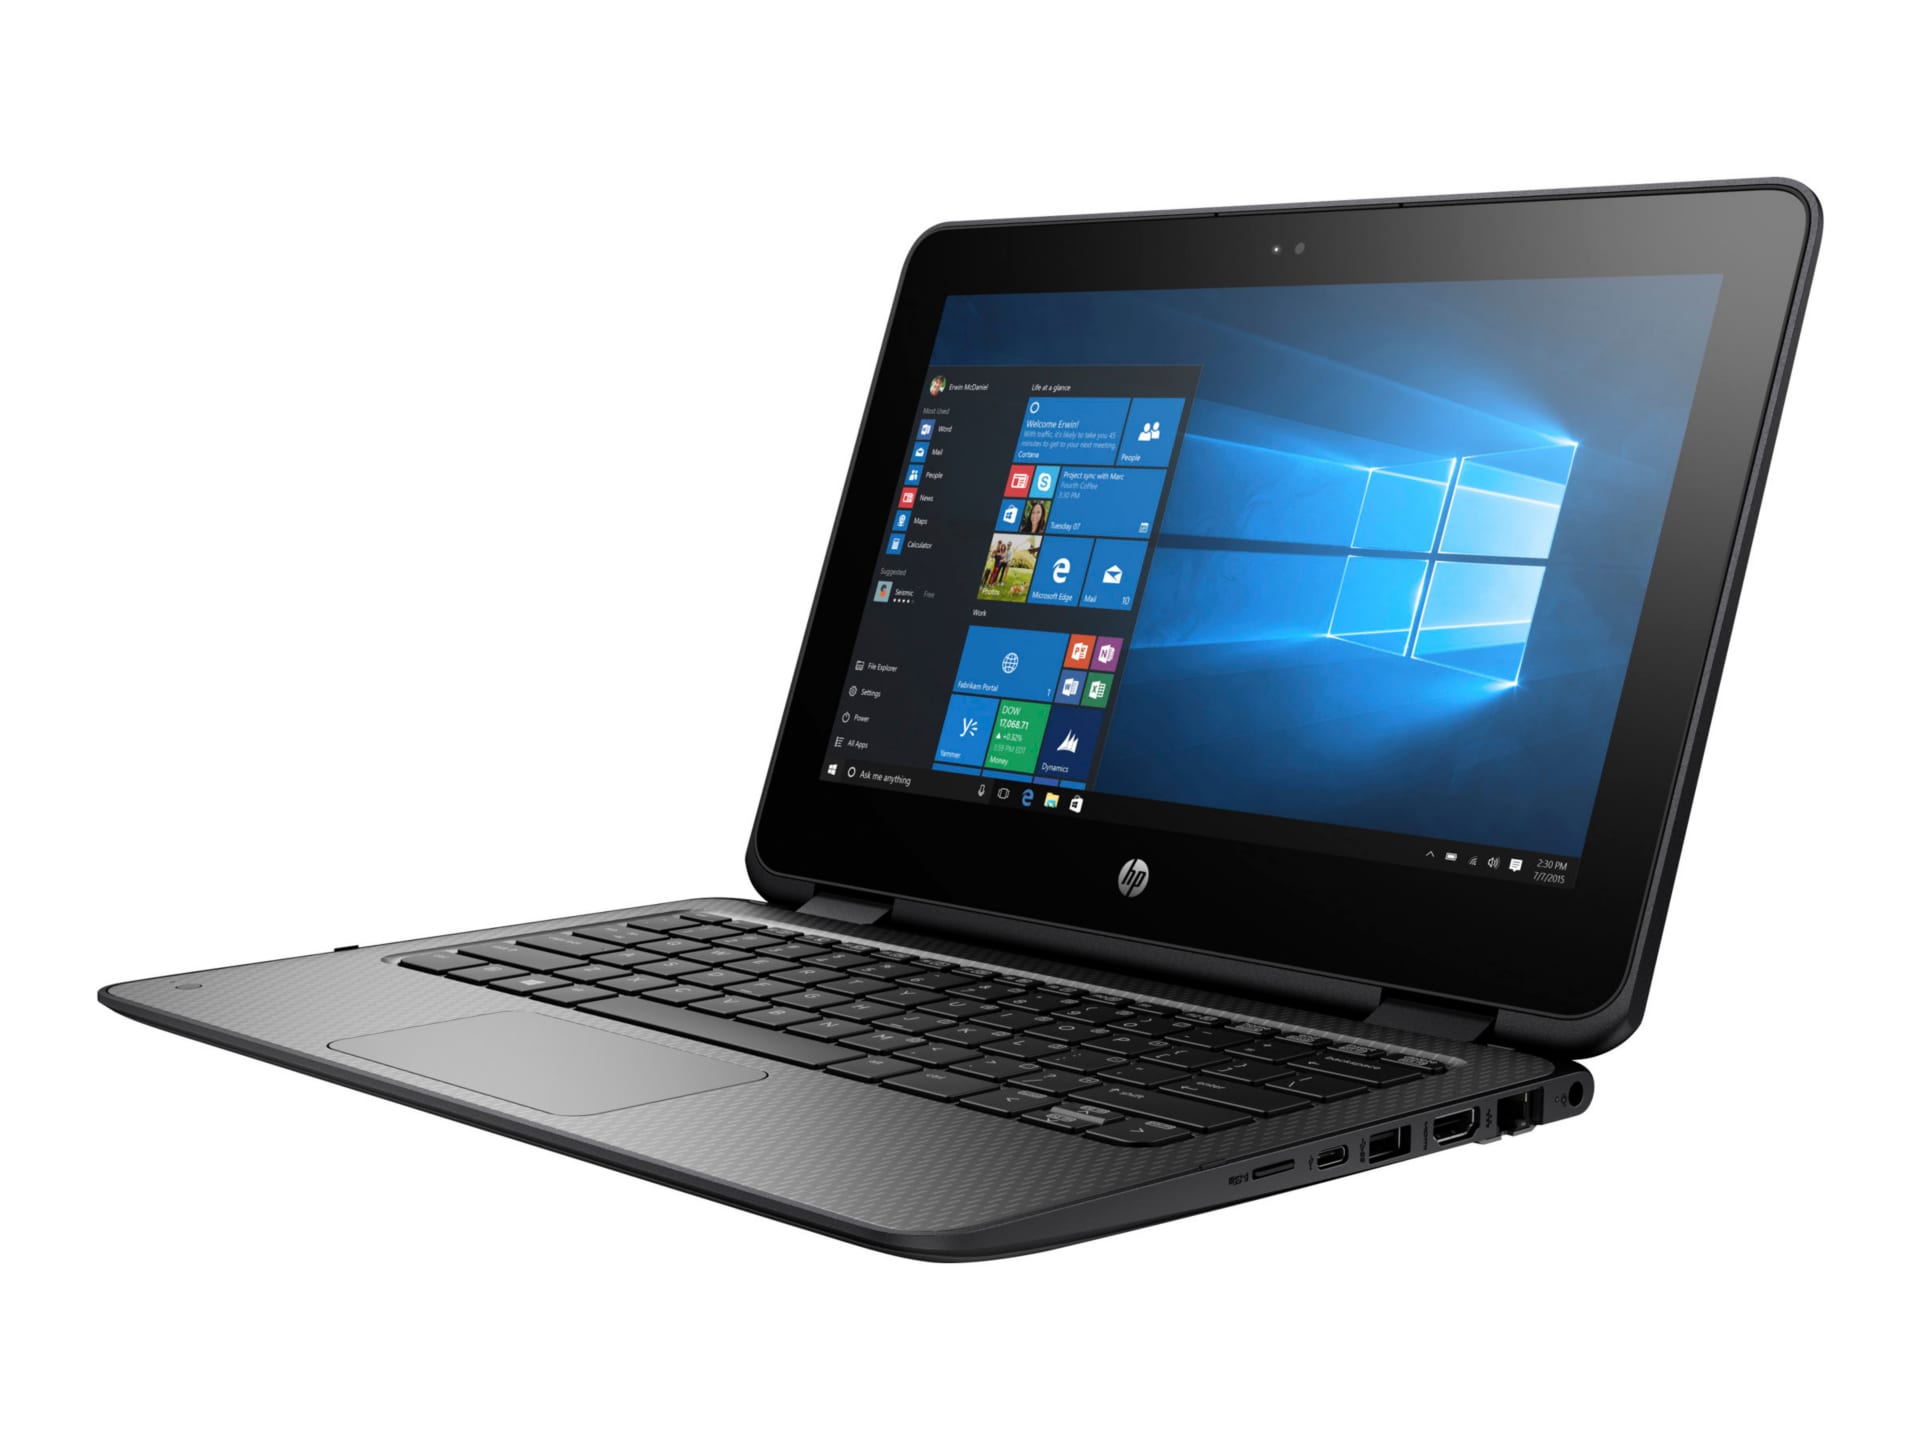 HP ProBook x360 11 G1 - Education Edition - 11.6" - Celeron N3350 - 4 GB RAM - 128 GB SSD - US